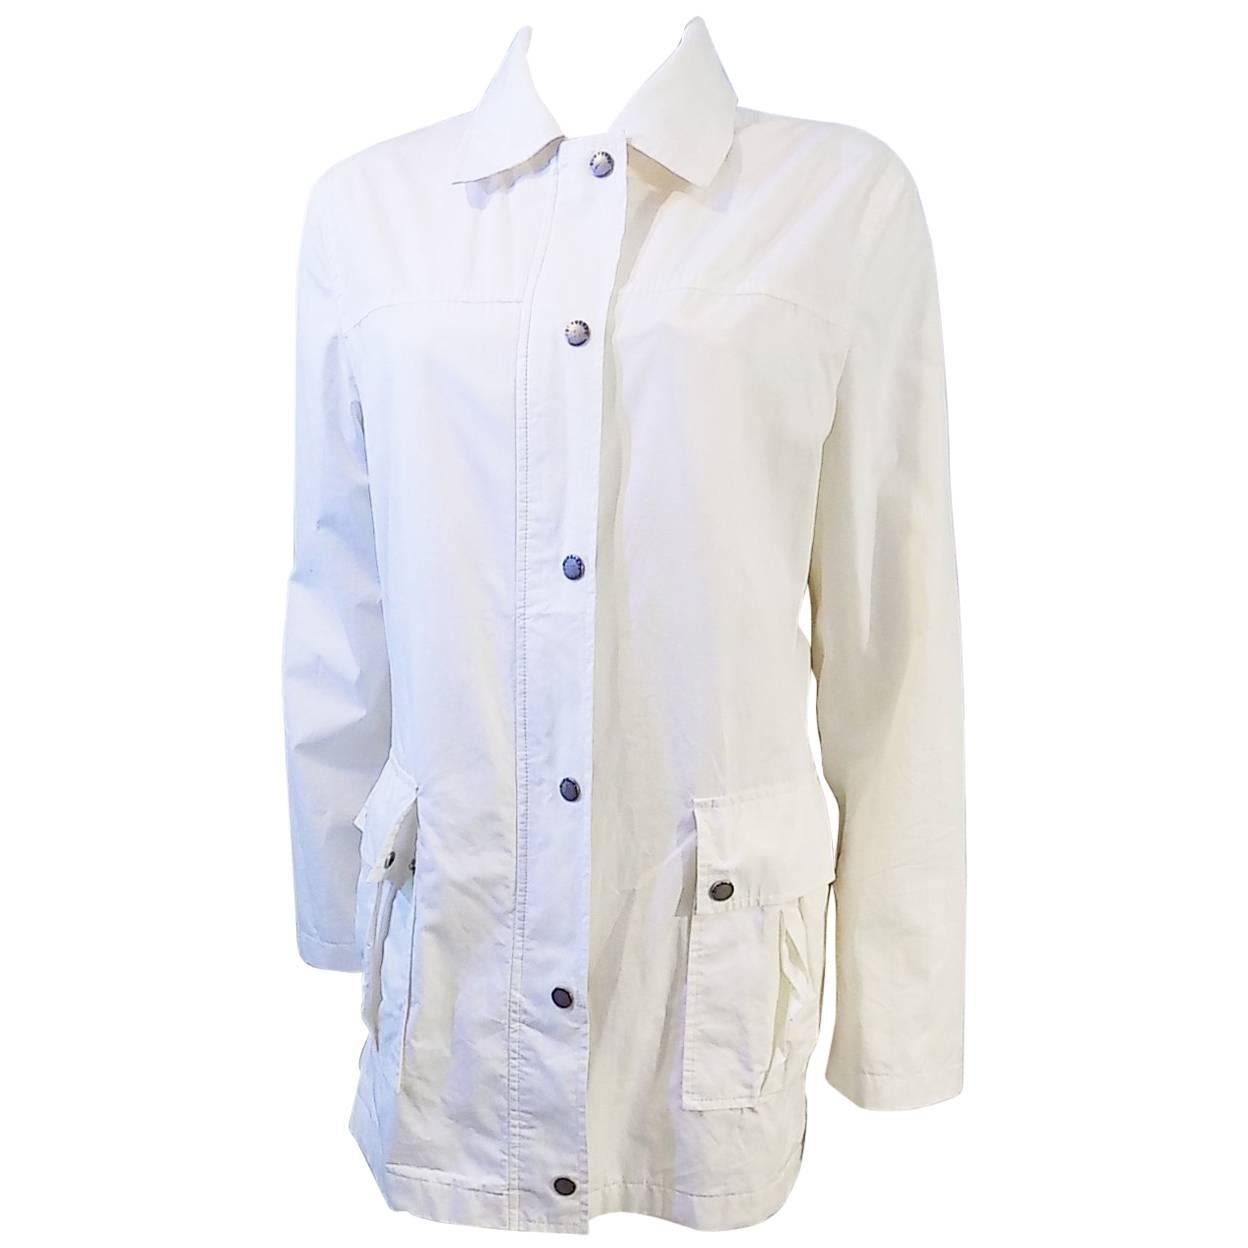 Burberry white w novacheck lining rain jacket For Sale